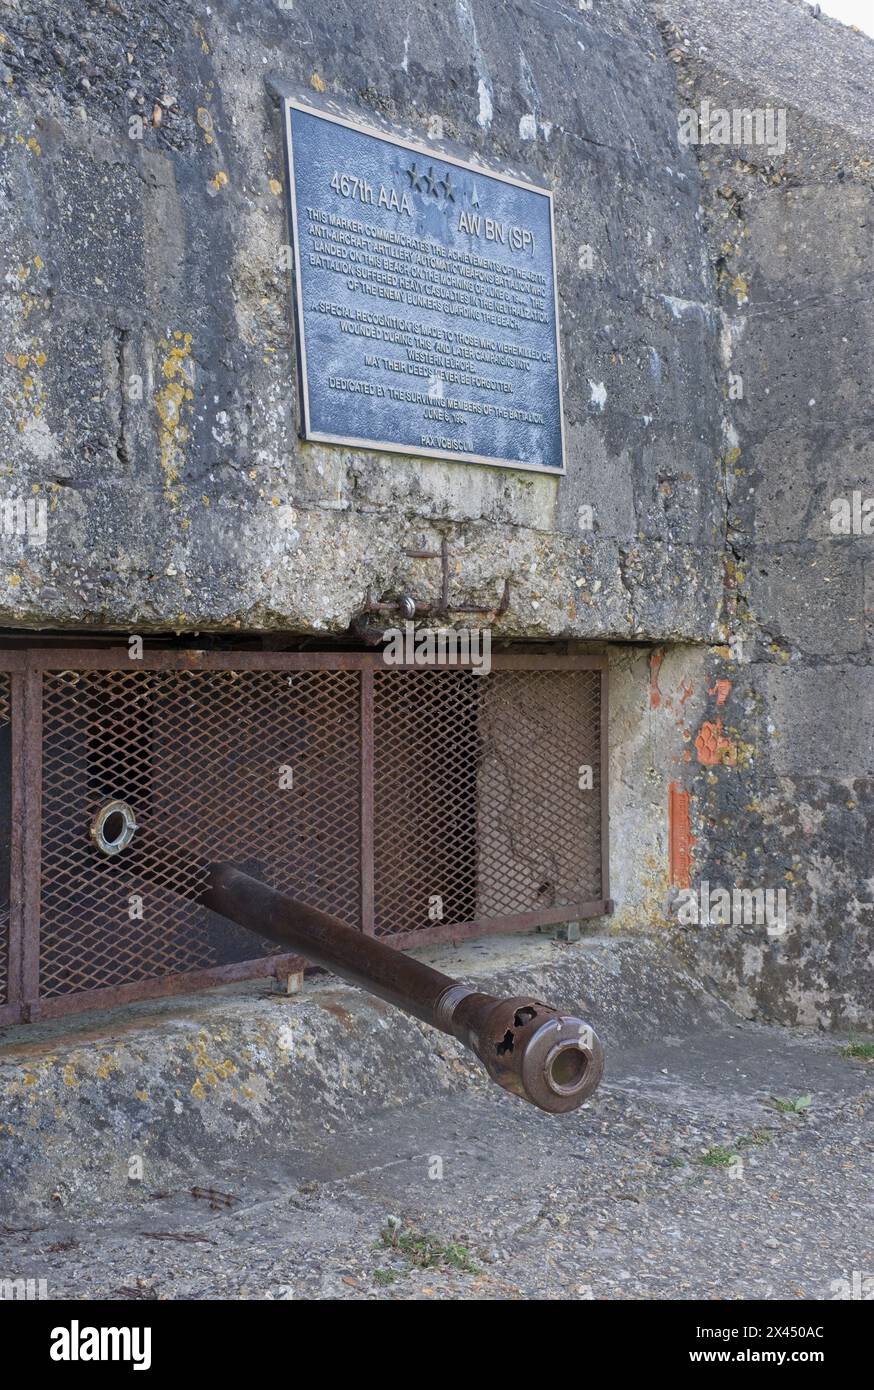 Saint-Laurent-sur-Mer, Francia - 24 aprile 2024: Bunker tedesco WN 65 (Widerstandsnest 65) nel settore Easy Green durante la seconda guerra mondiale. Primavera soleggiata Foto Stock